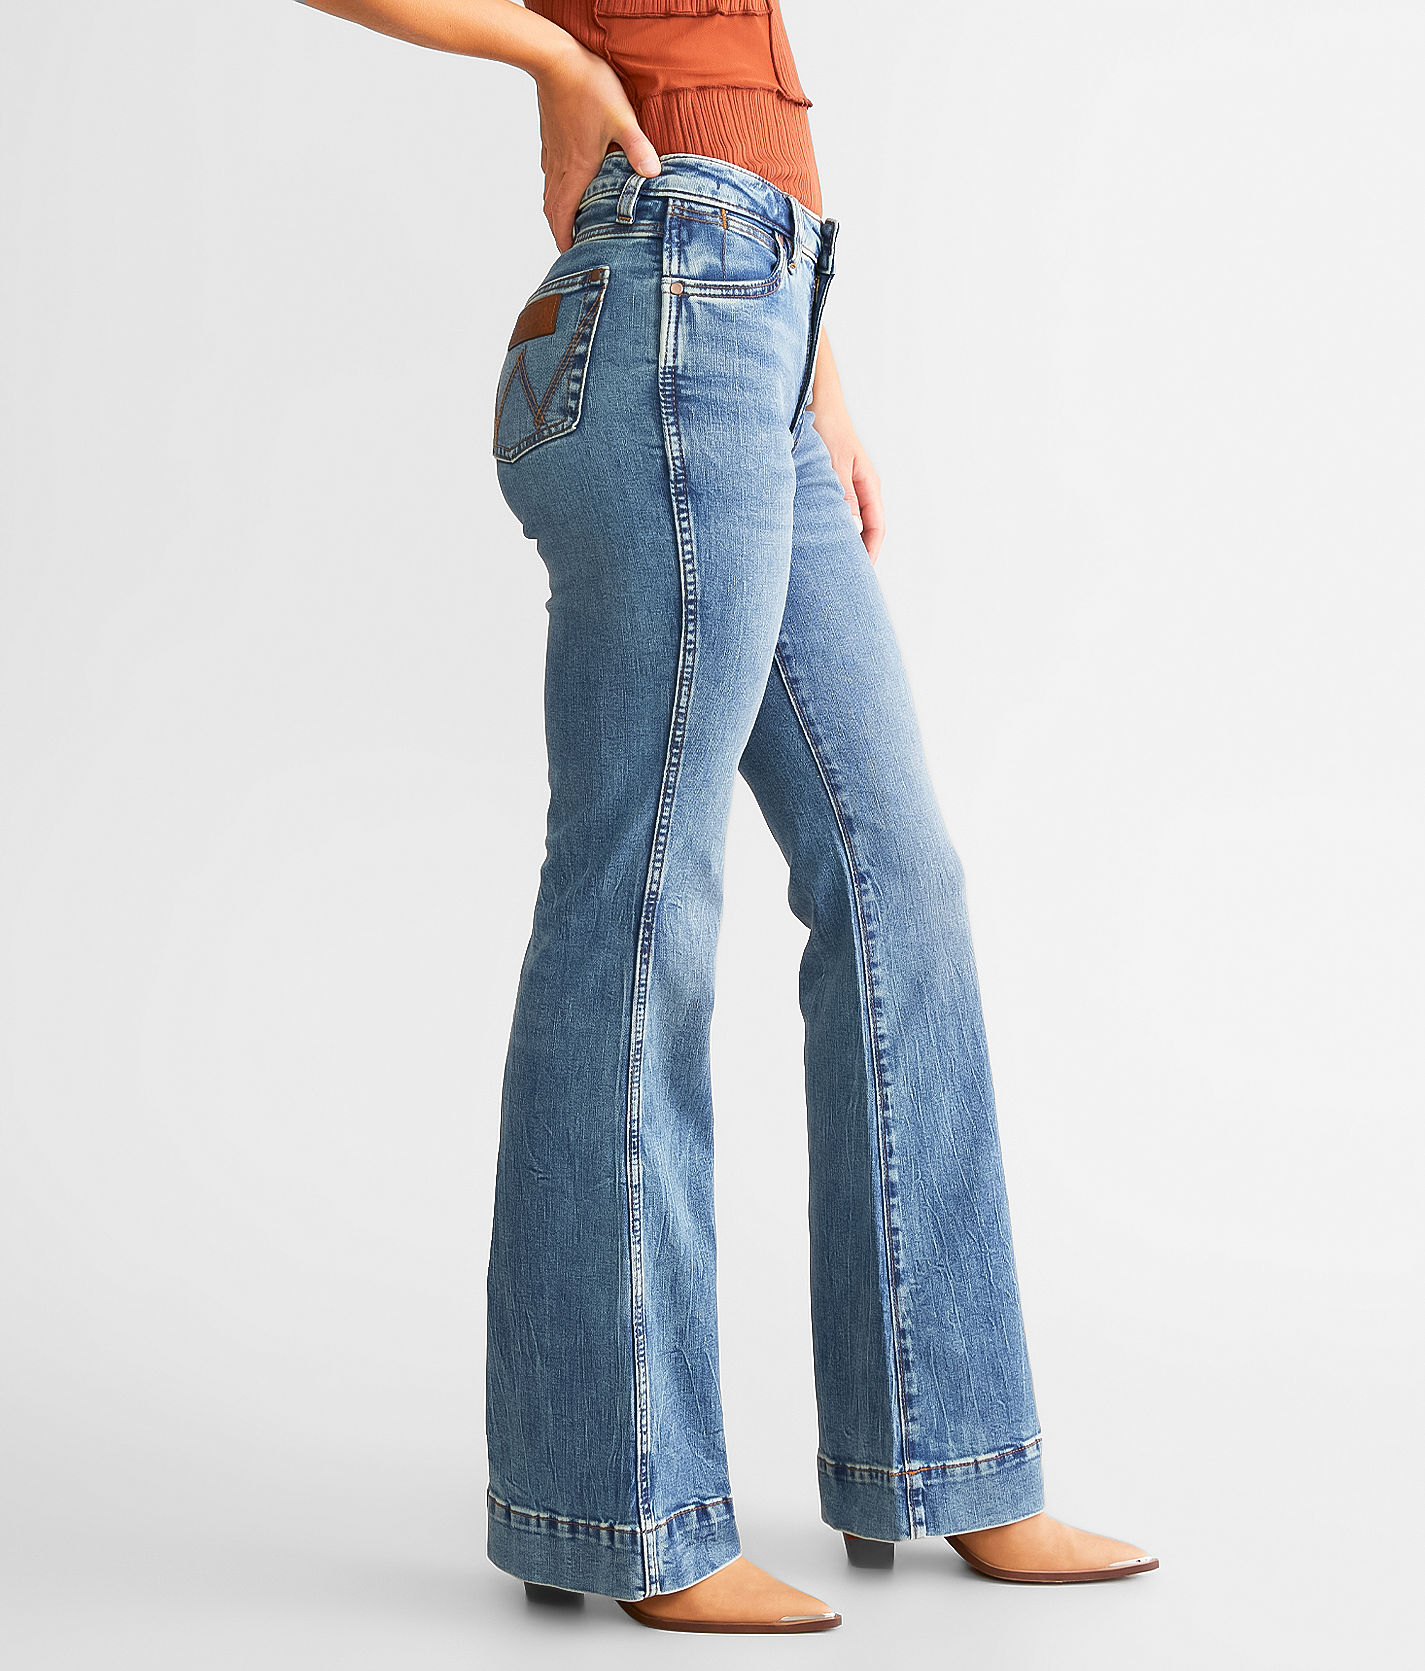 Jean Women\'s in Buckle Stretch - Briley Wrangler® Trouser Retro Jeans |